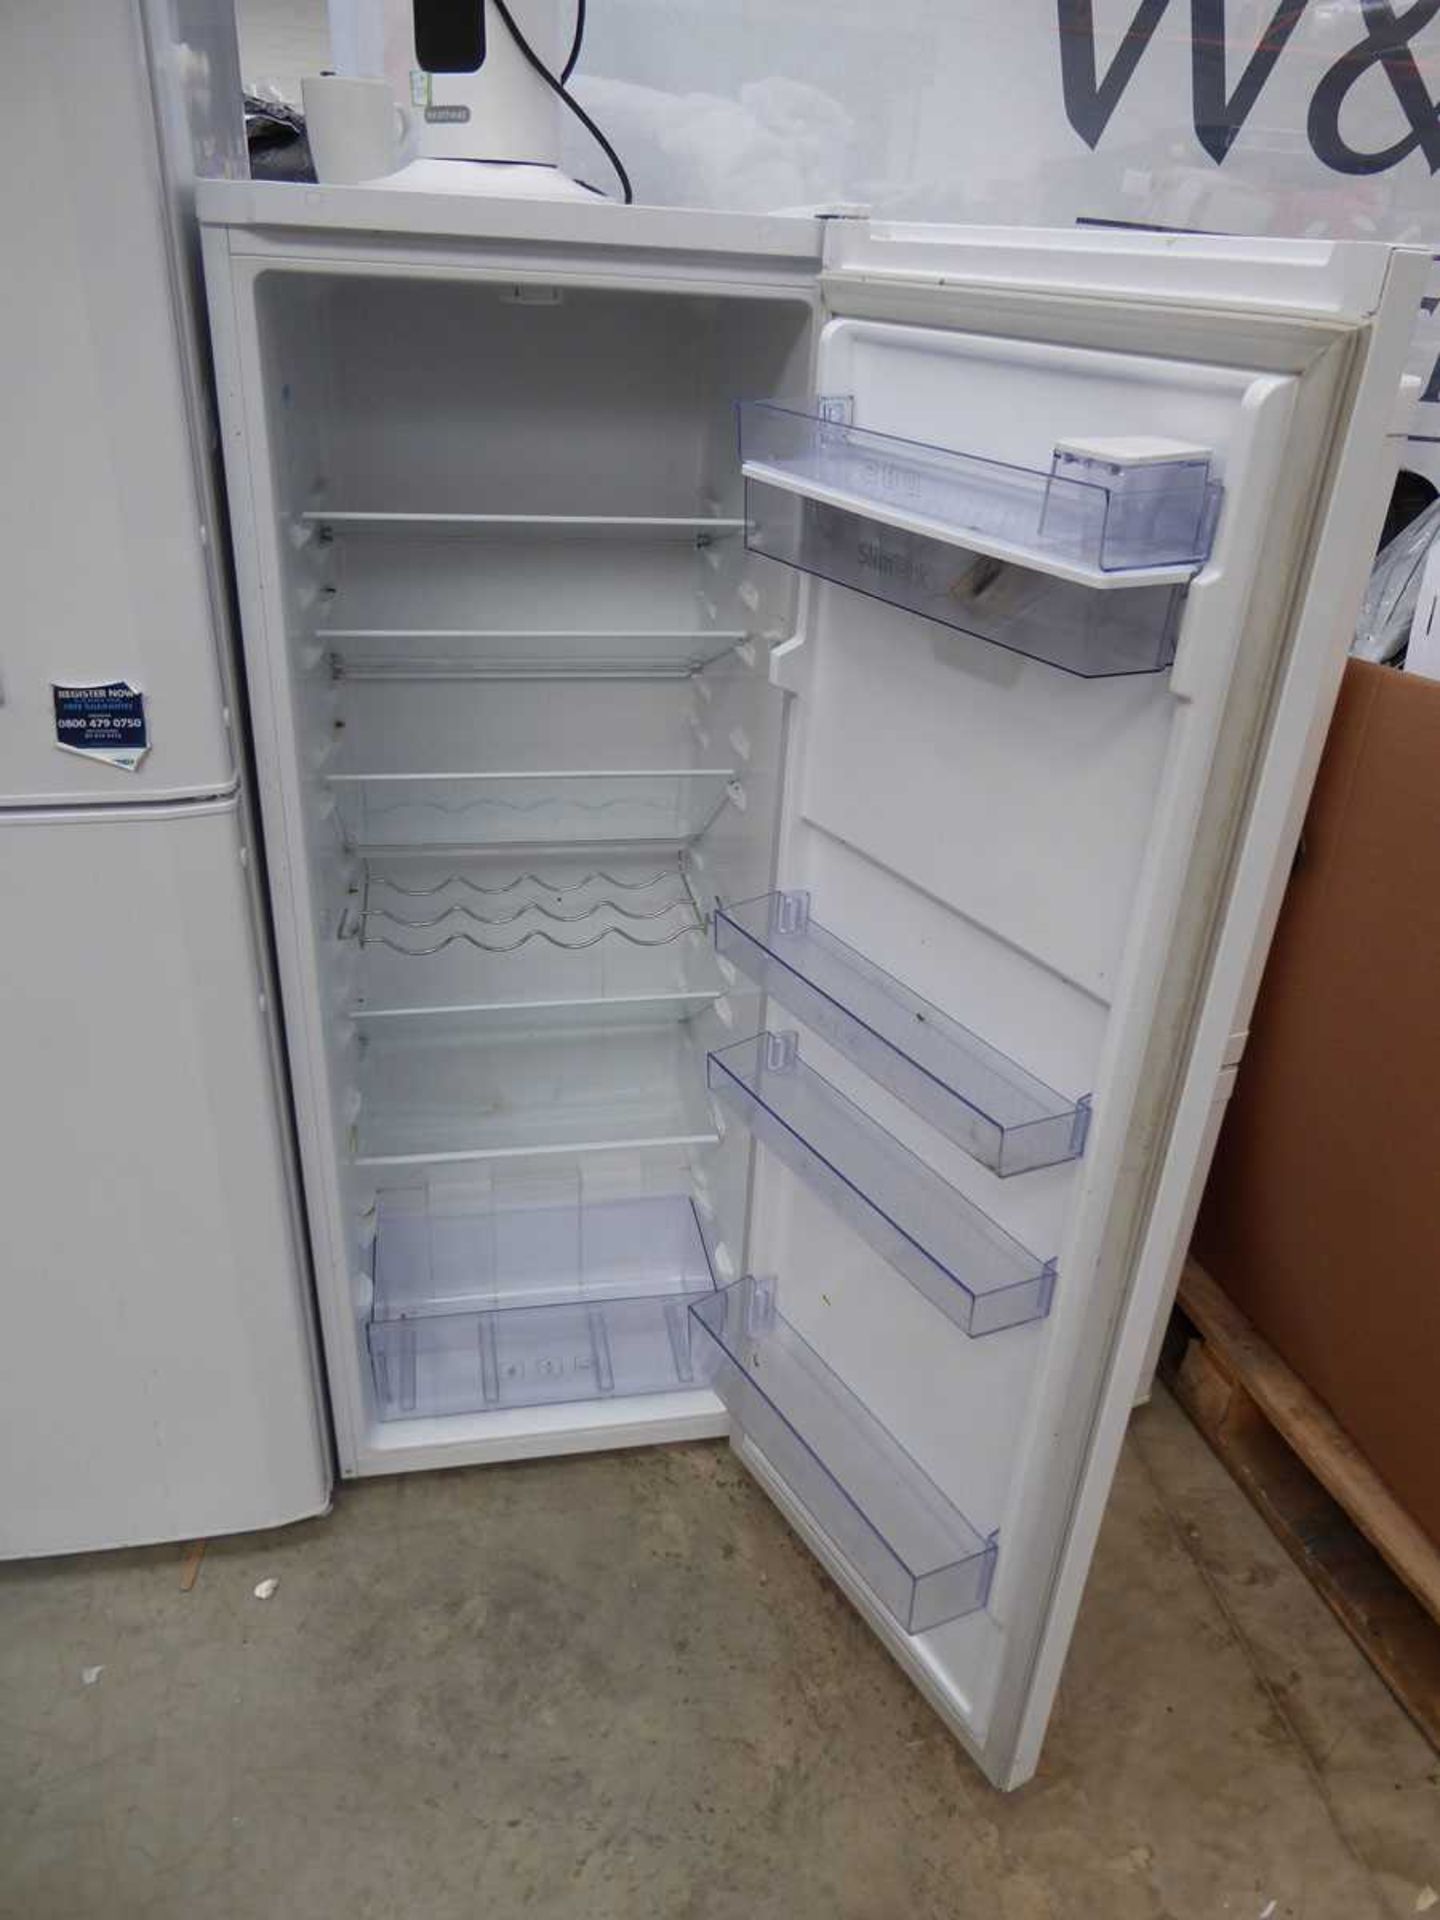 Beko upright larder fridge with integrated water dispenser - Image 2 of 2